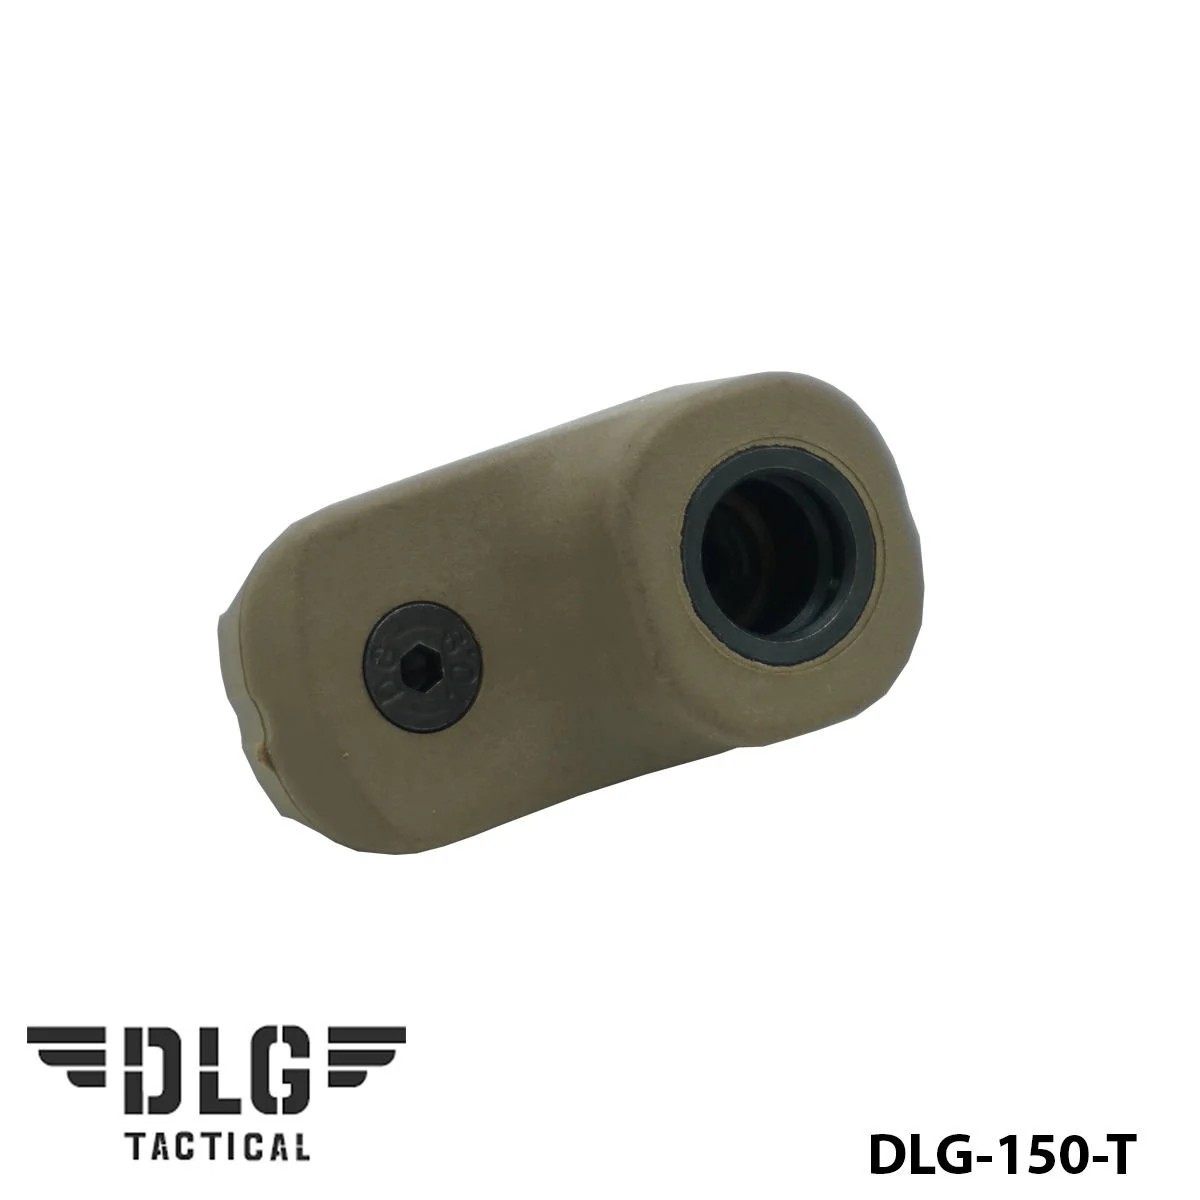 QD M-LOK MOUNT DLG-150-T Tan